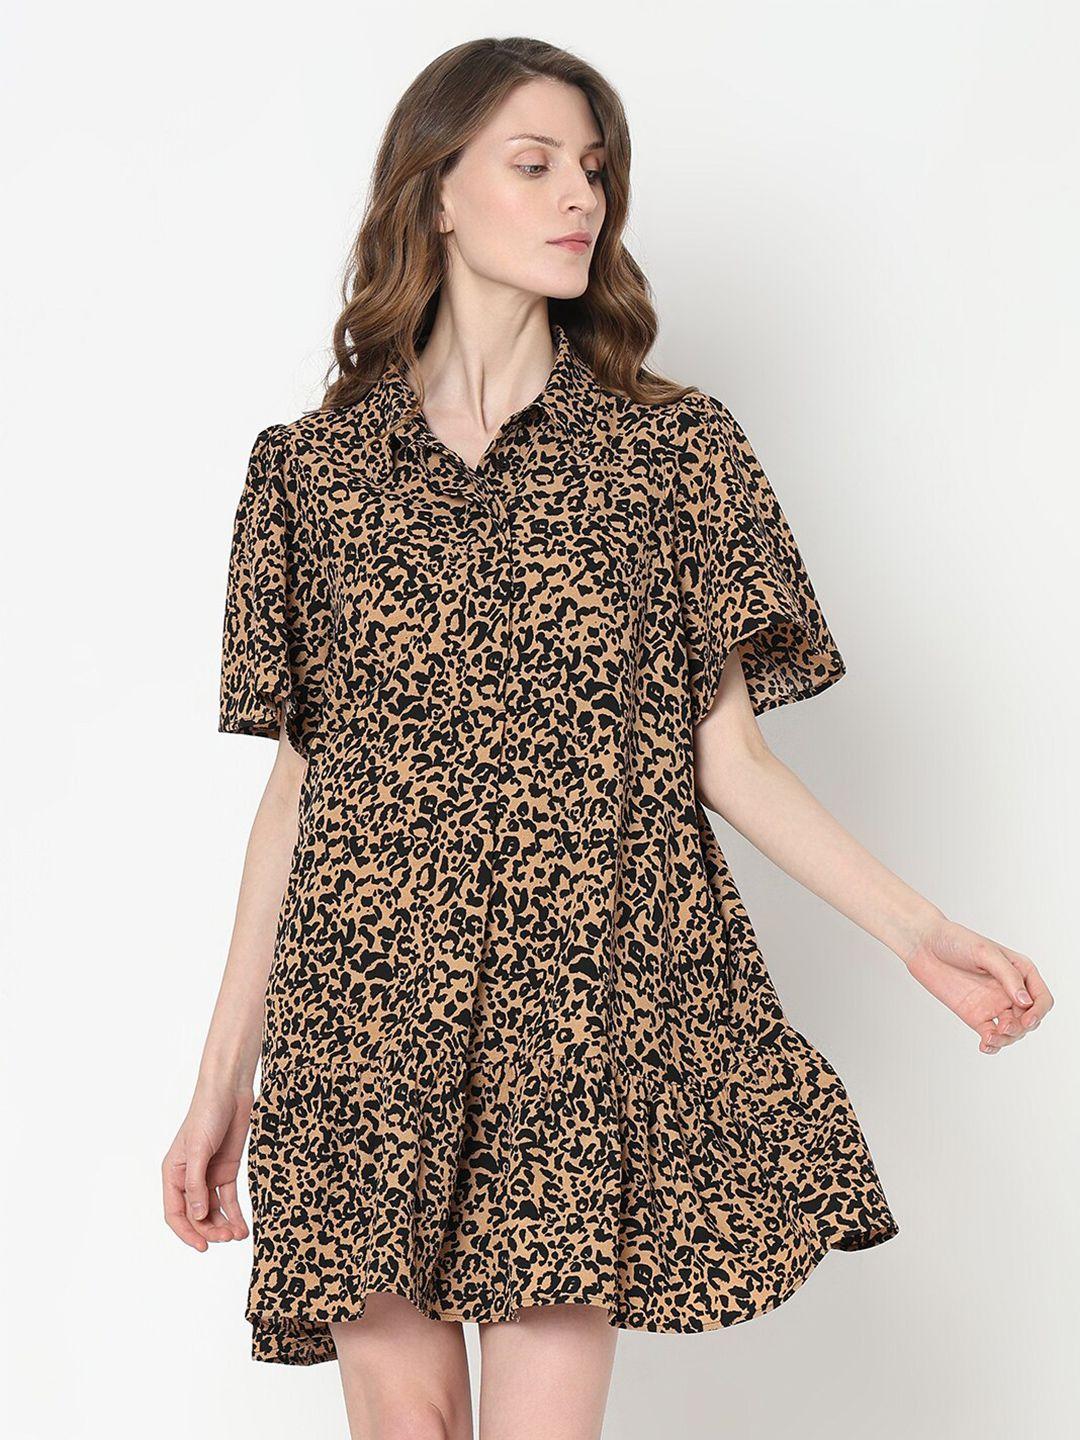 vero moda animal print flared sleeve ruffled a-line dress